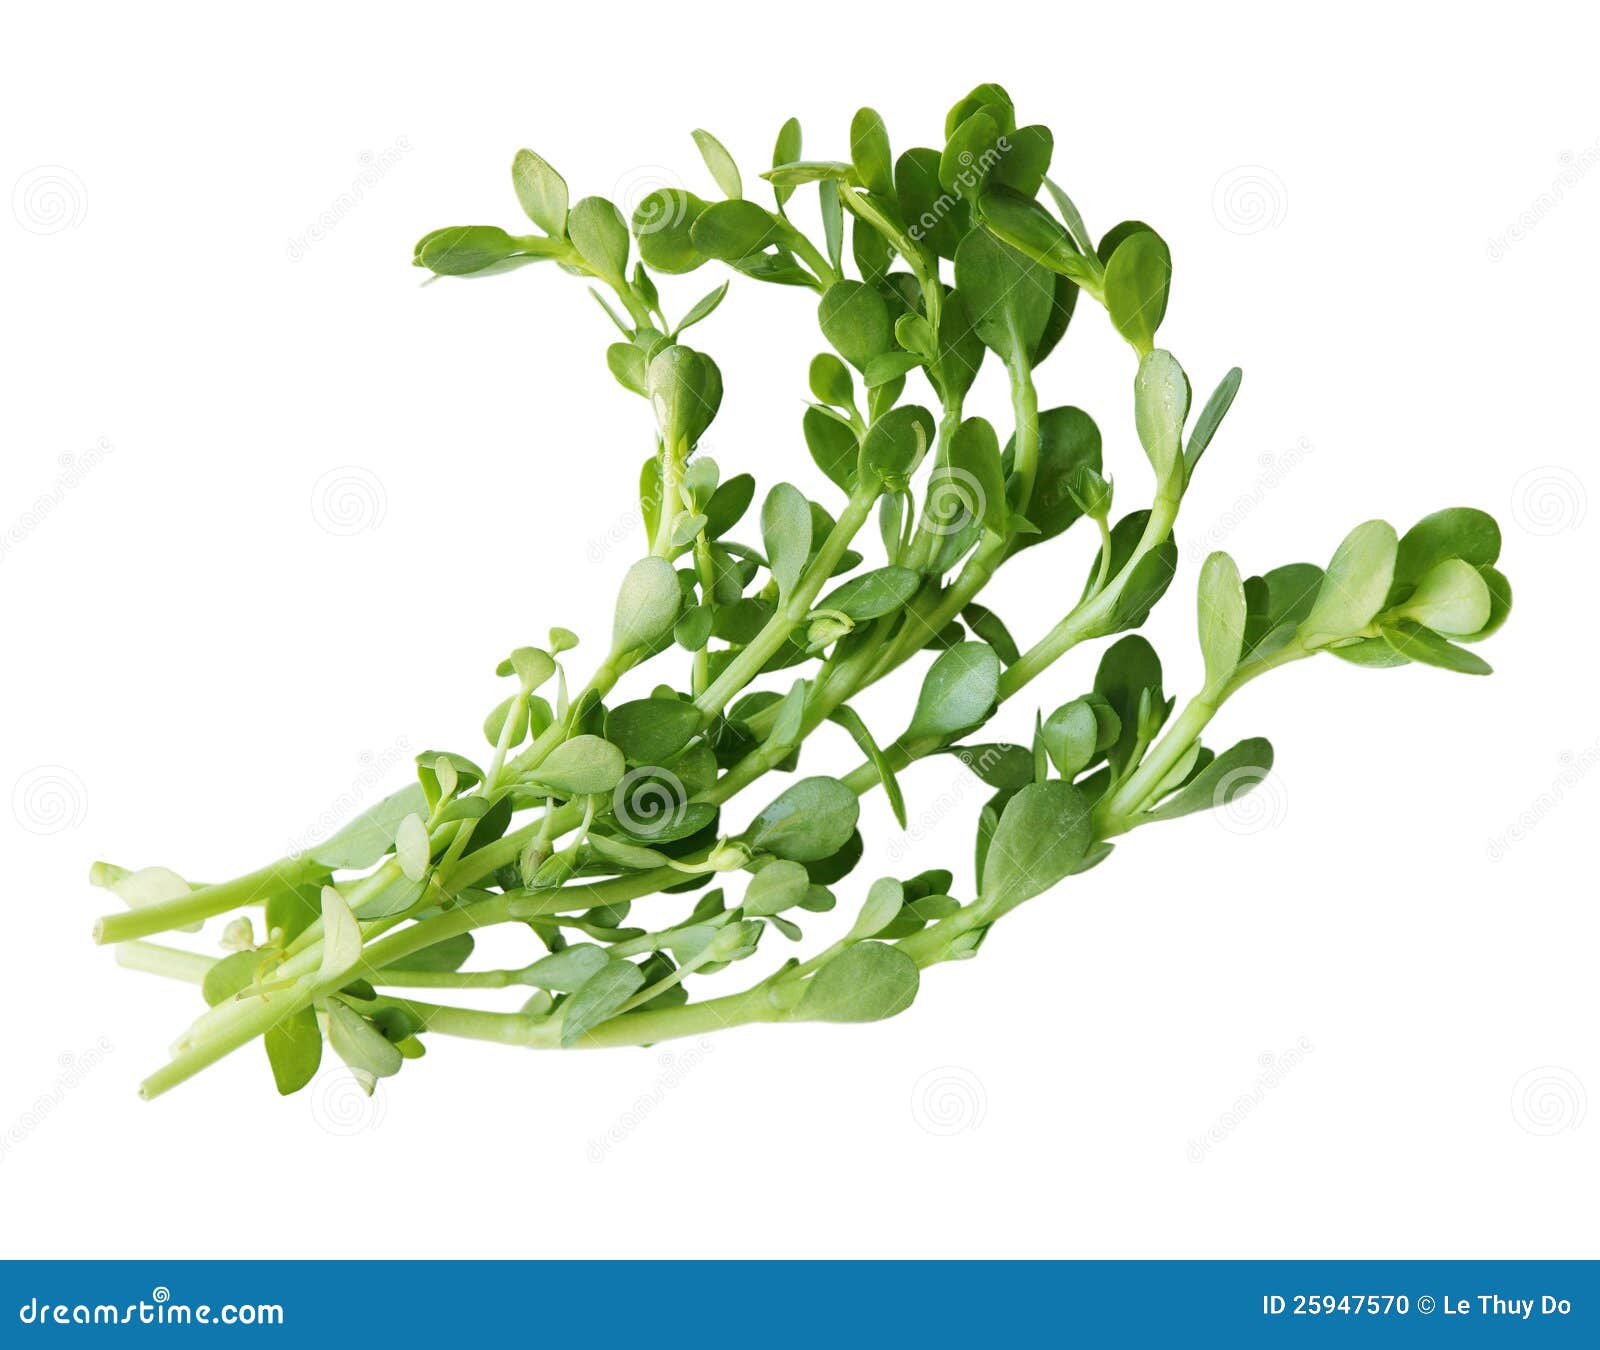 bitter herb plant